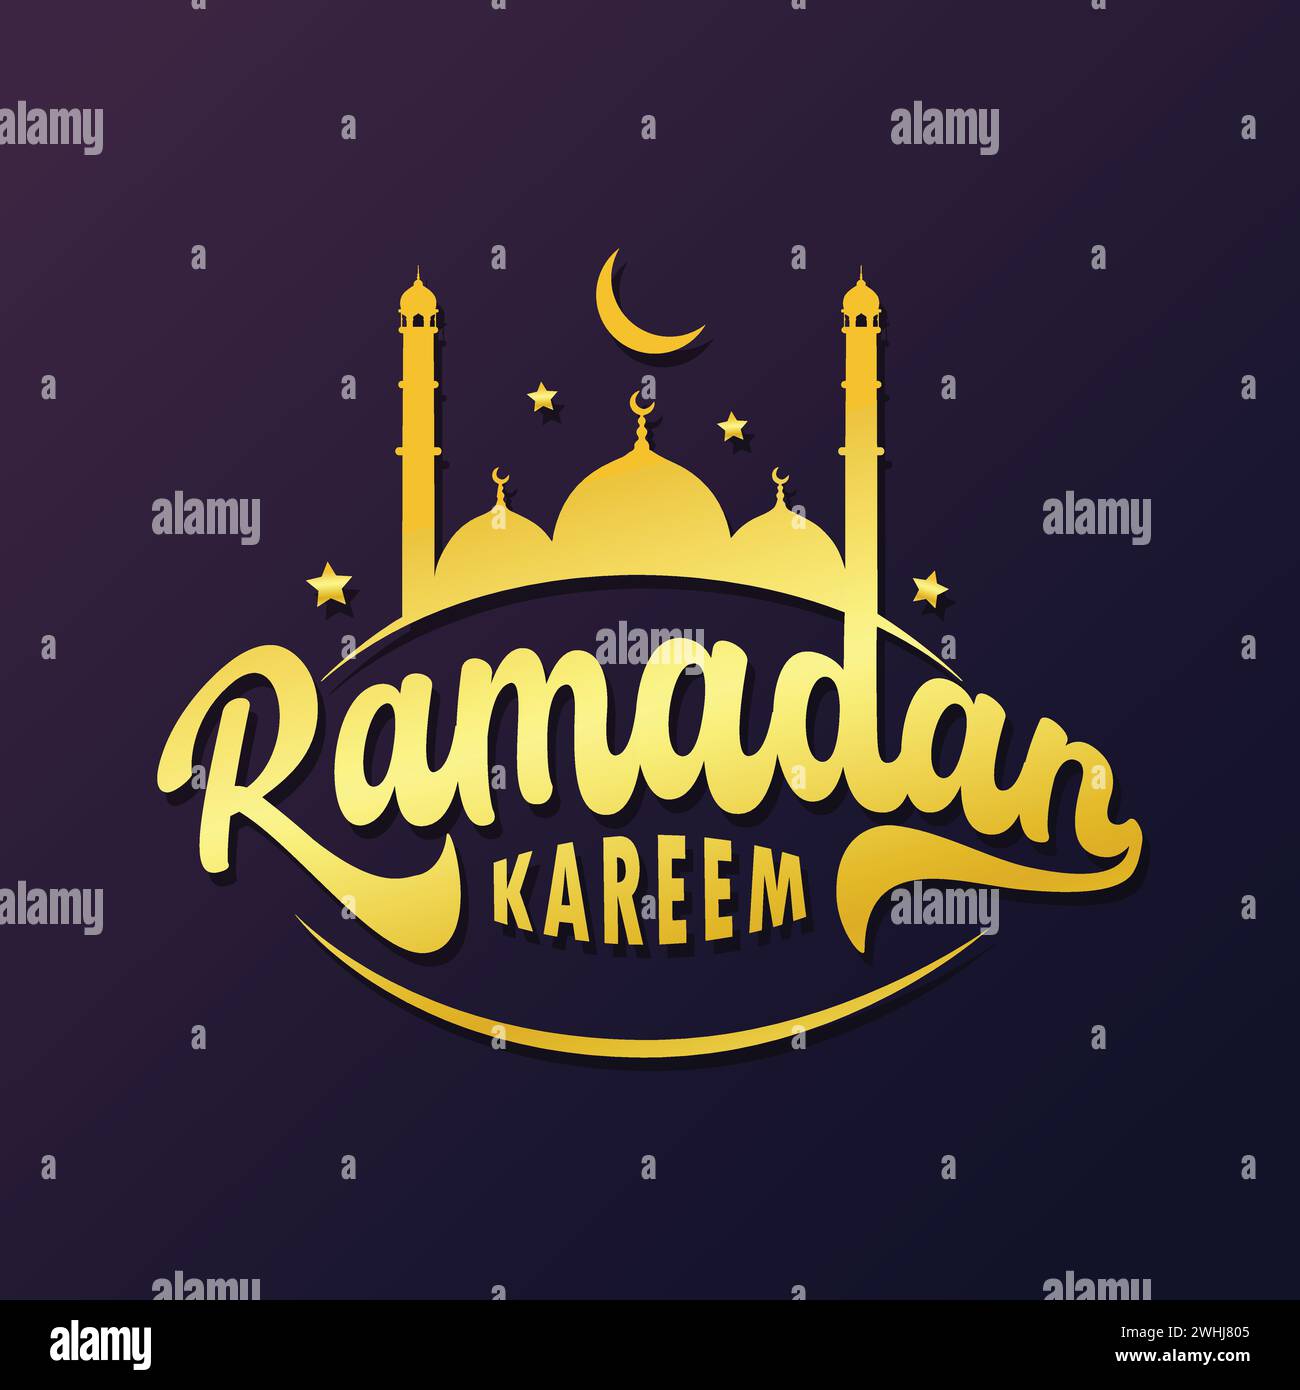 Ramadan Kareem carte de voeux vecteur lettrage illustration. Ramadan aussi appelé Ramazan, Ramzan, Ramadhan est musulman dans le monde entier un mois de jeûne. Illustration de Vecteur